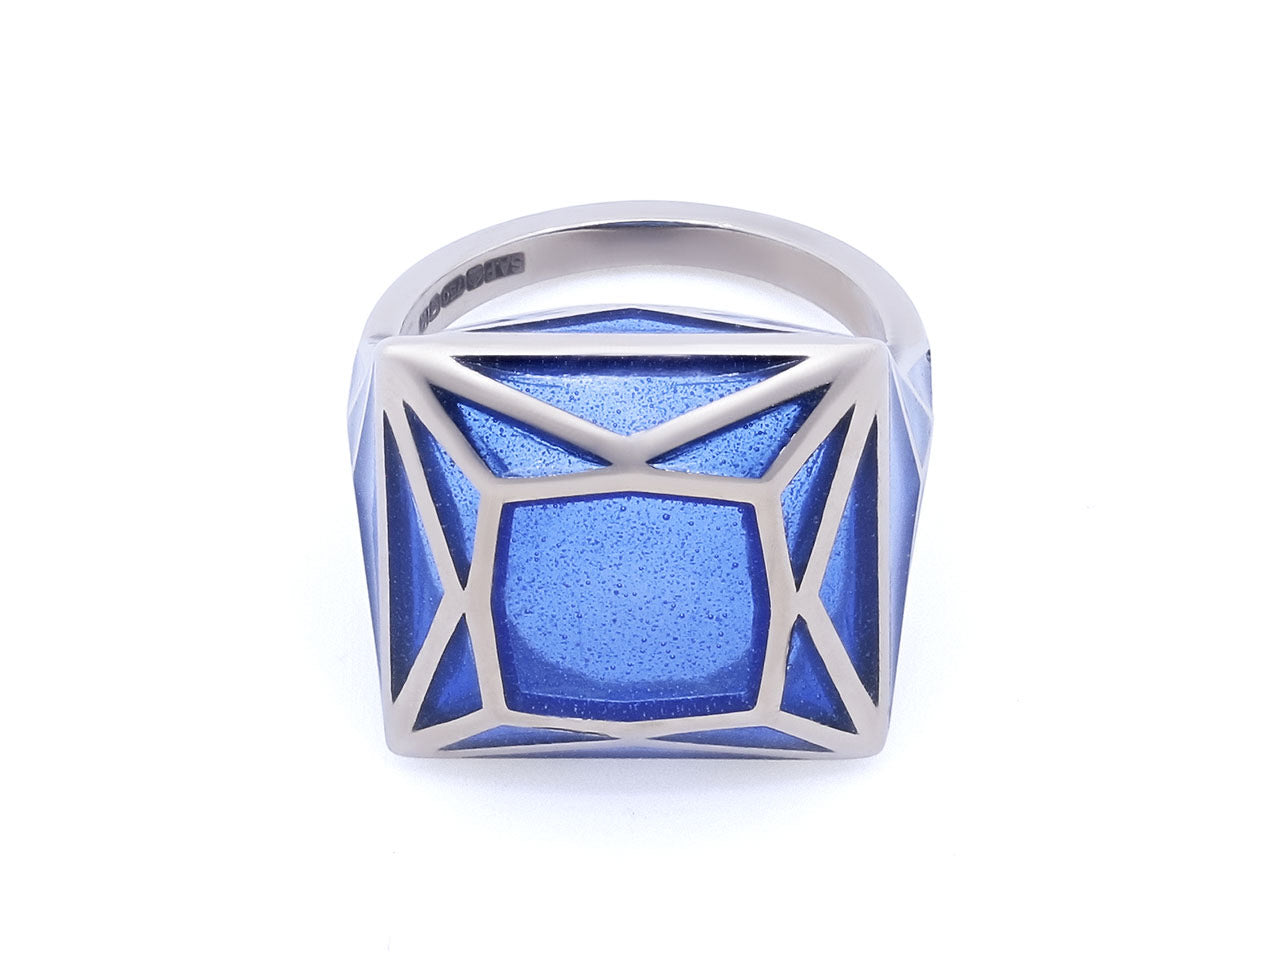 Solange Azagury-Partridge 'Real Fake' Square Blue Enamel Ring in 18K White Gold